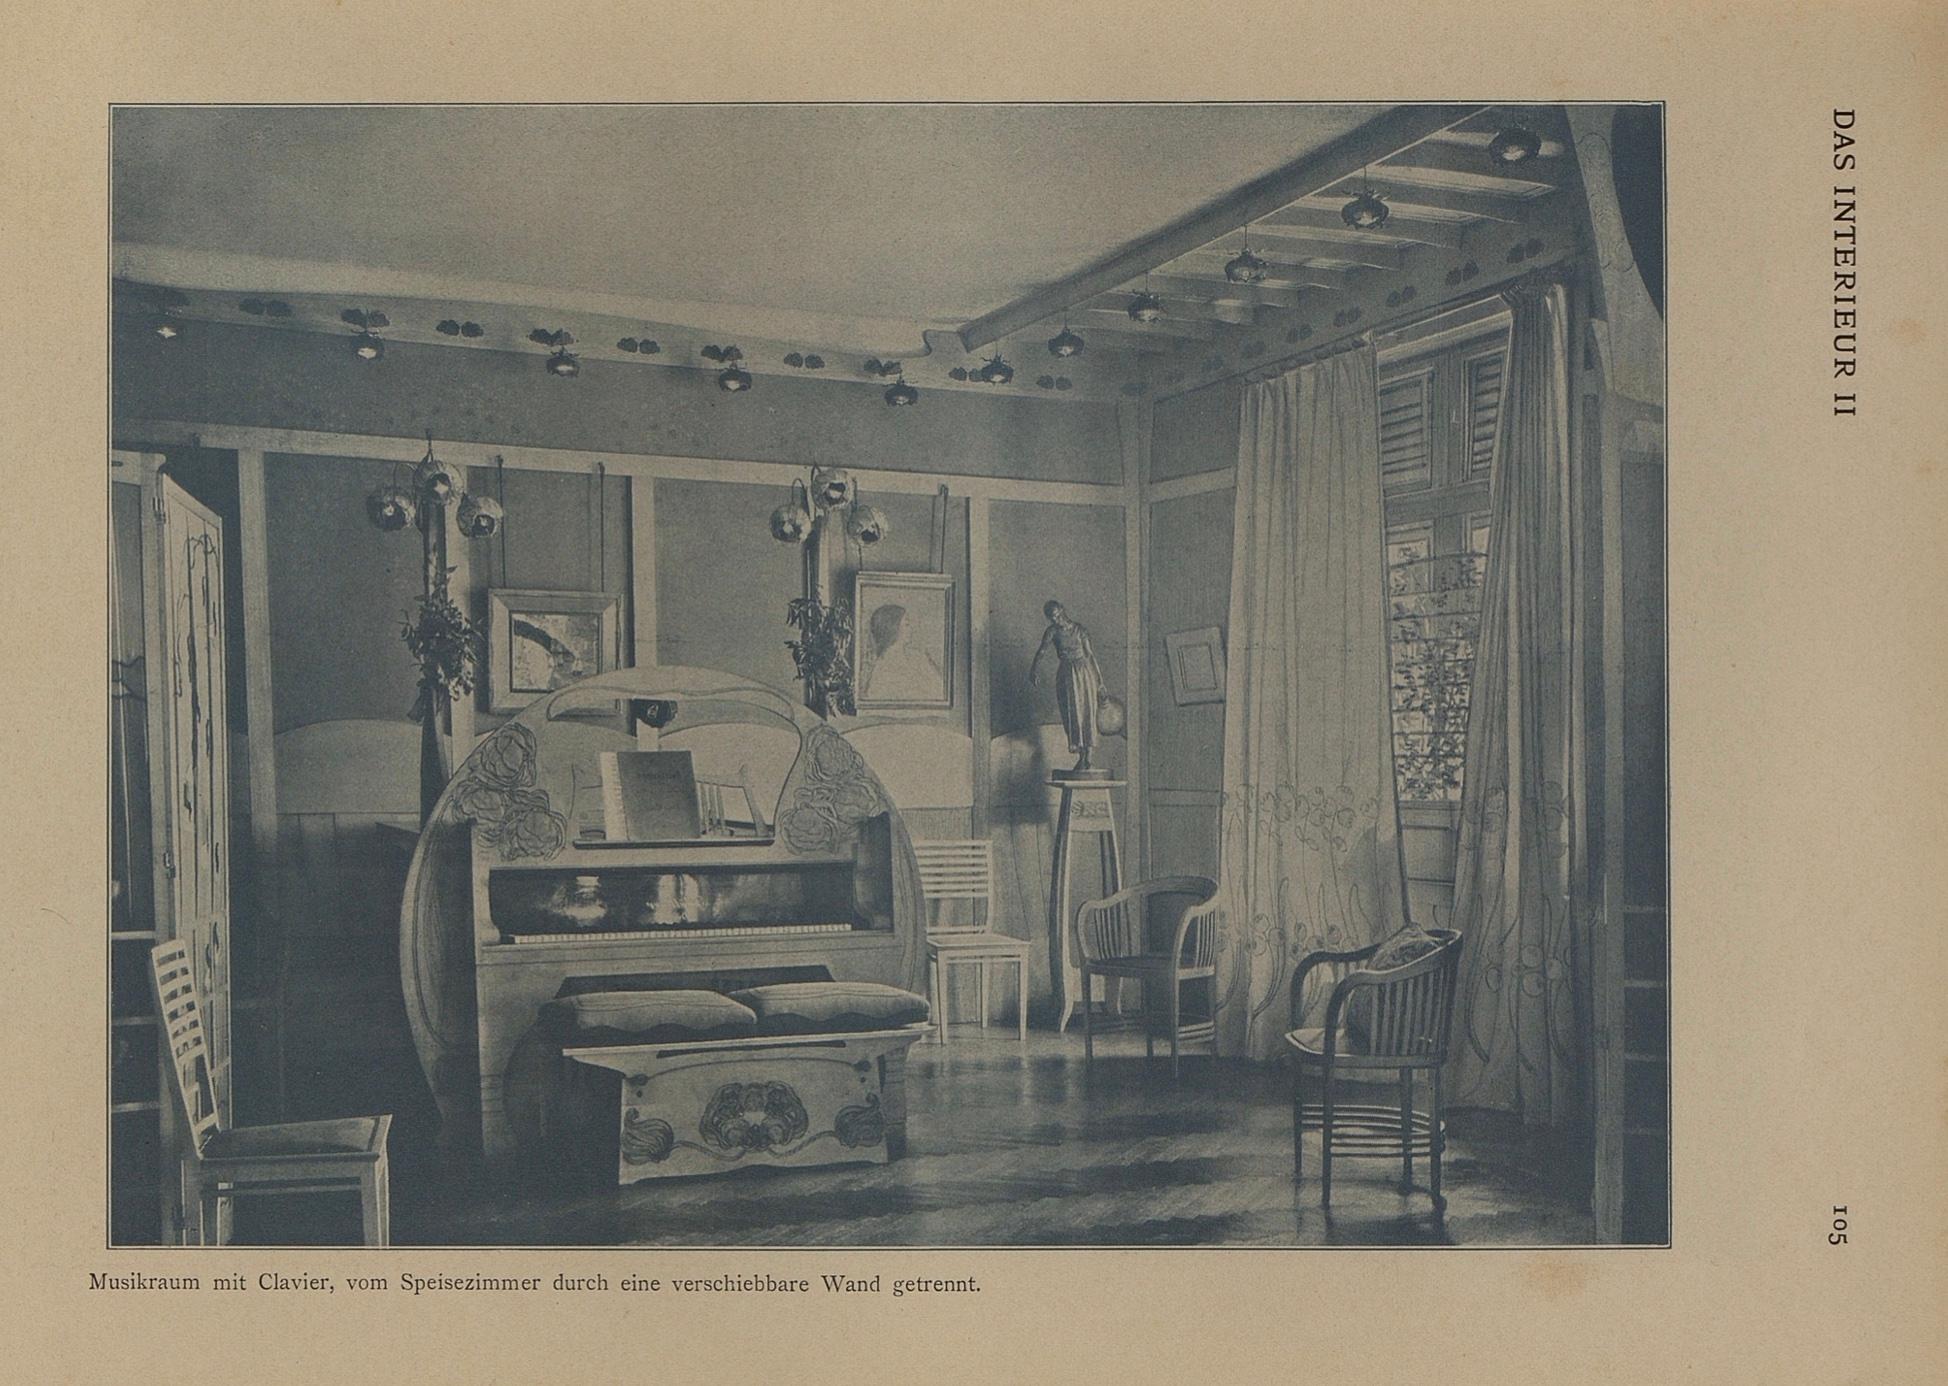 2 Jugendstil Armlehnstühle, Design von J.M.Olbrich / M. Niedermoser (Wien, 1899) For Sale 1